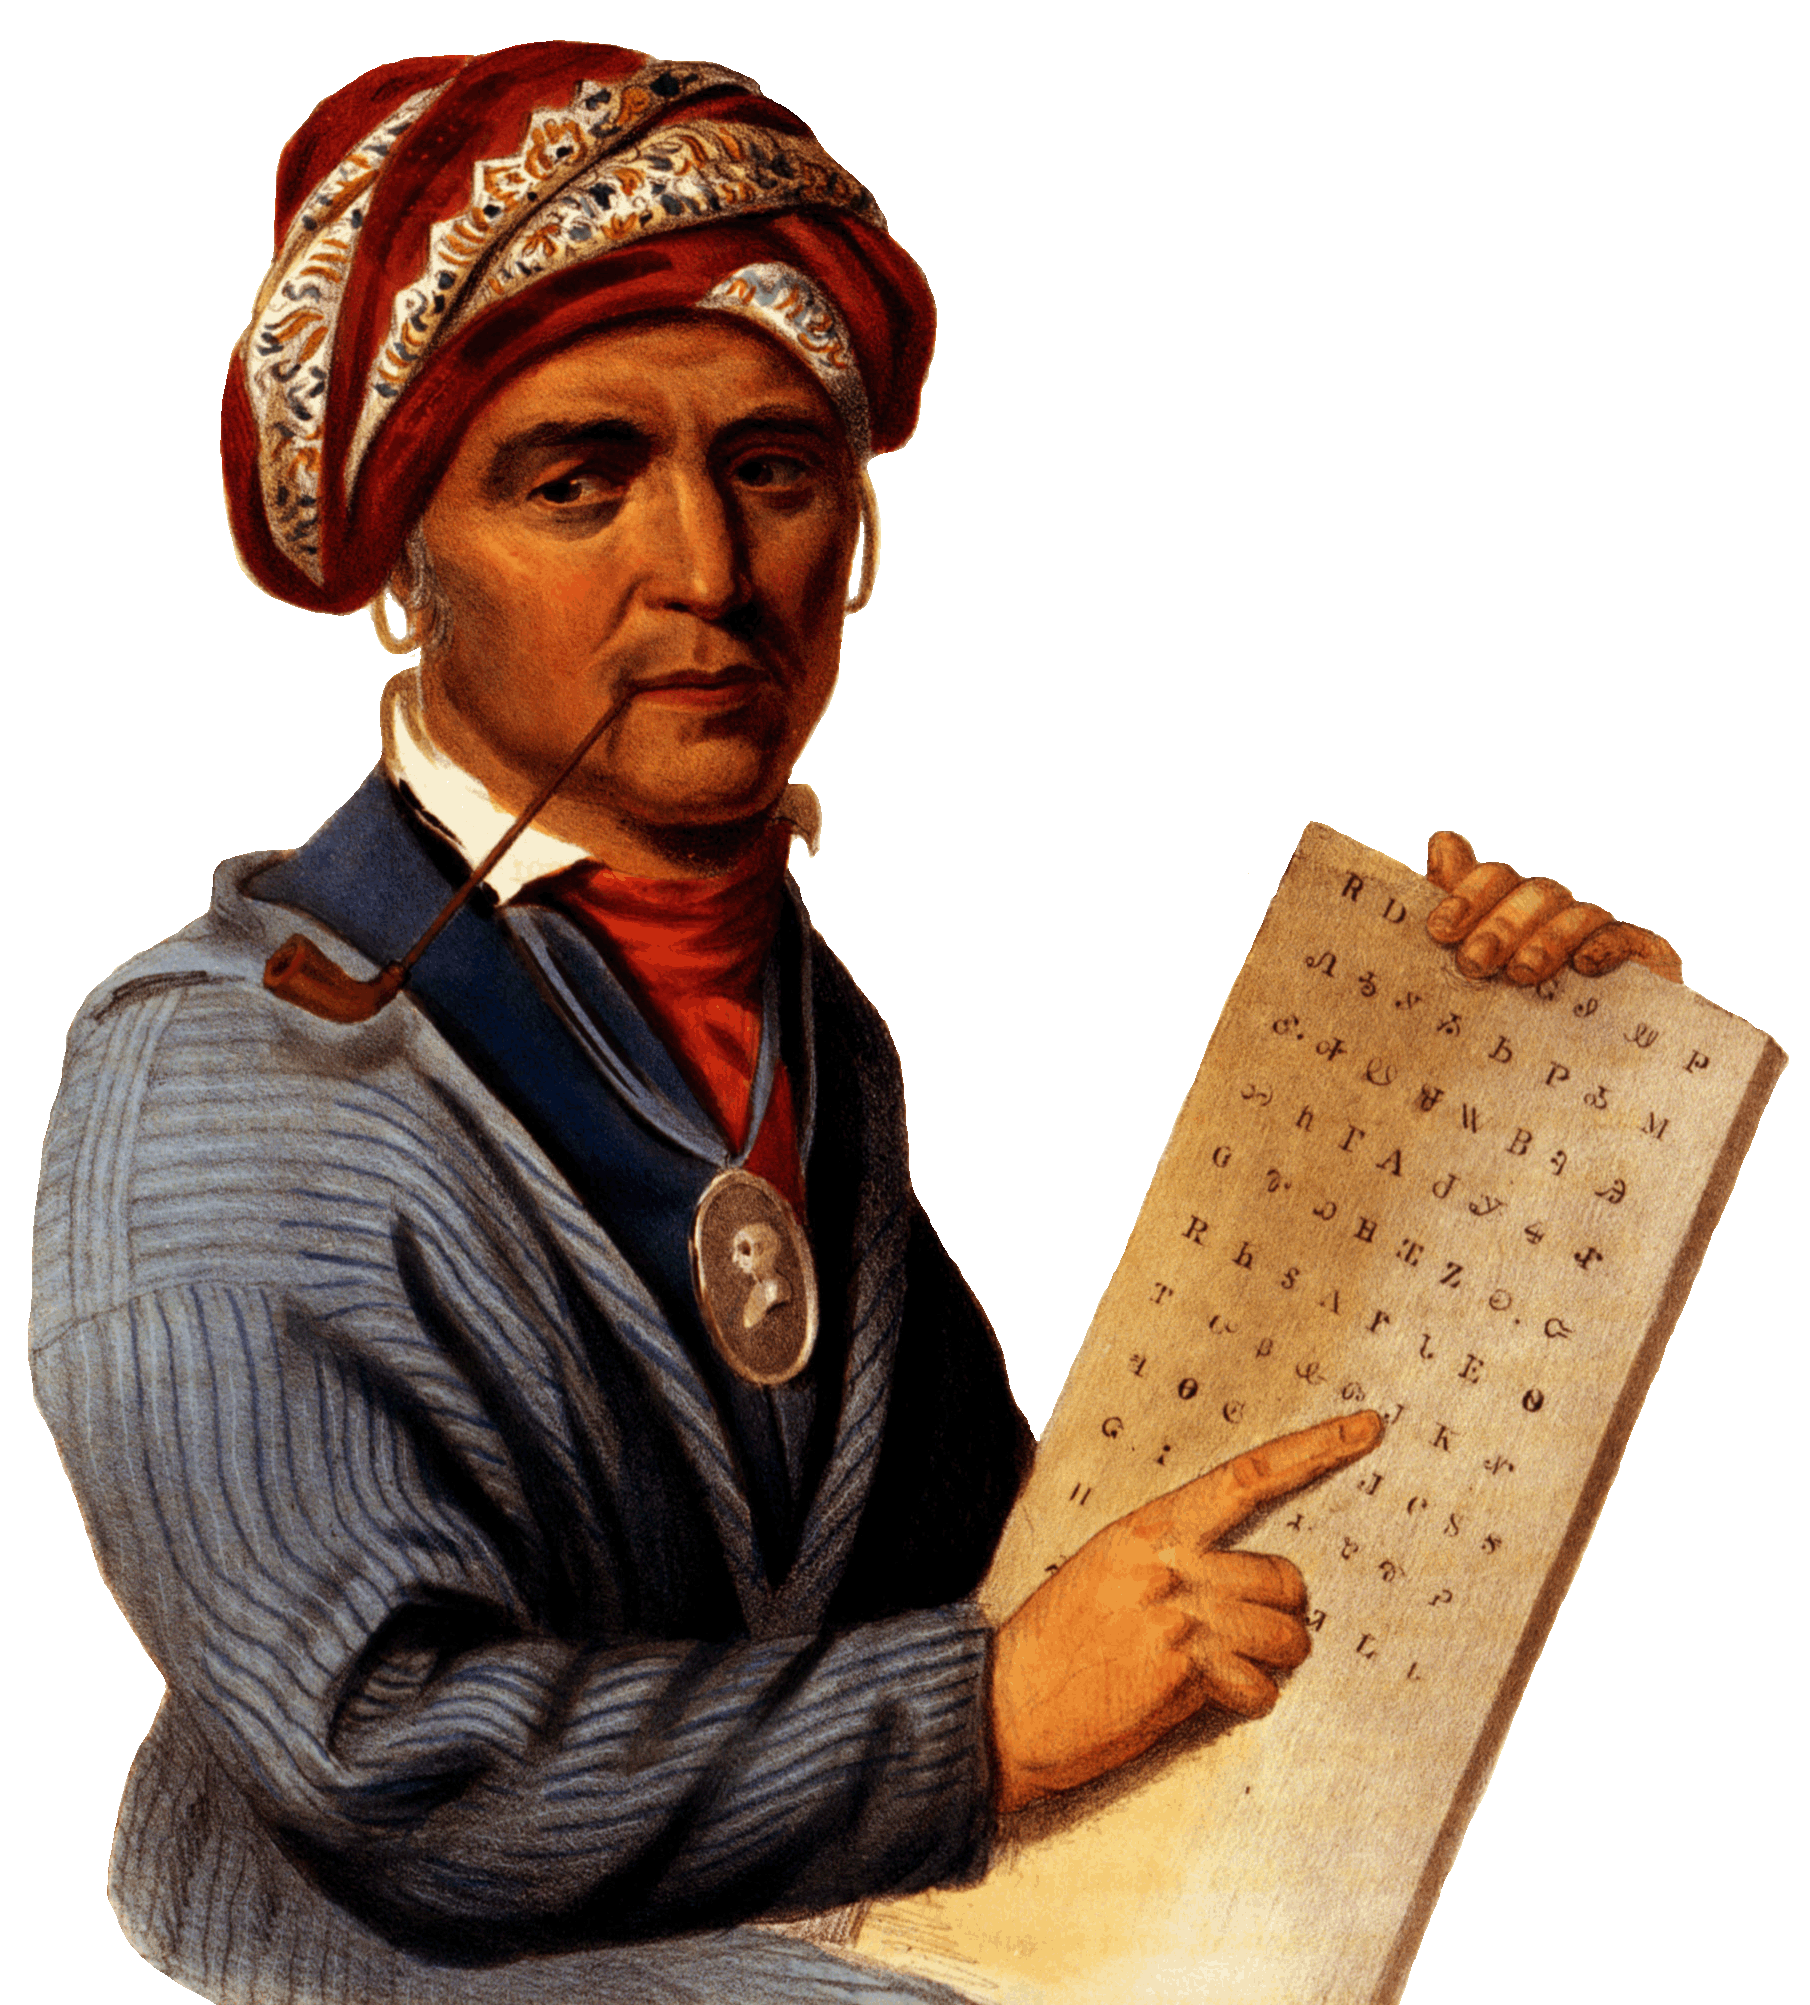 Cherokee writing system